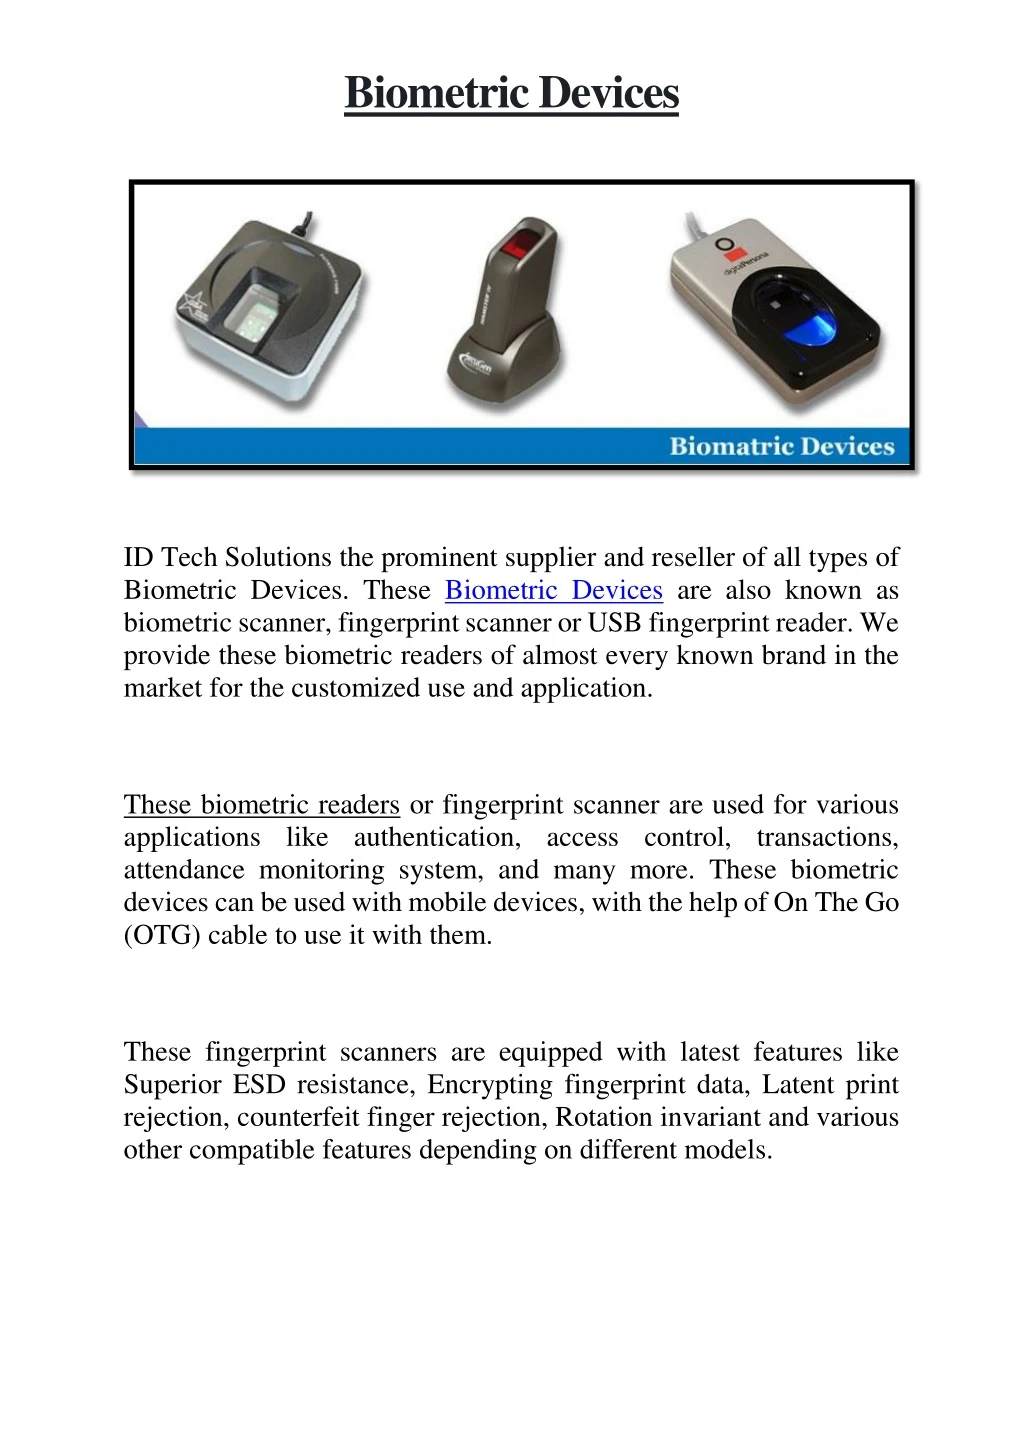 biometric devices